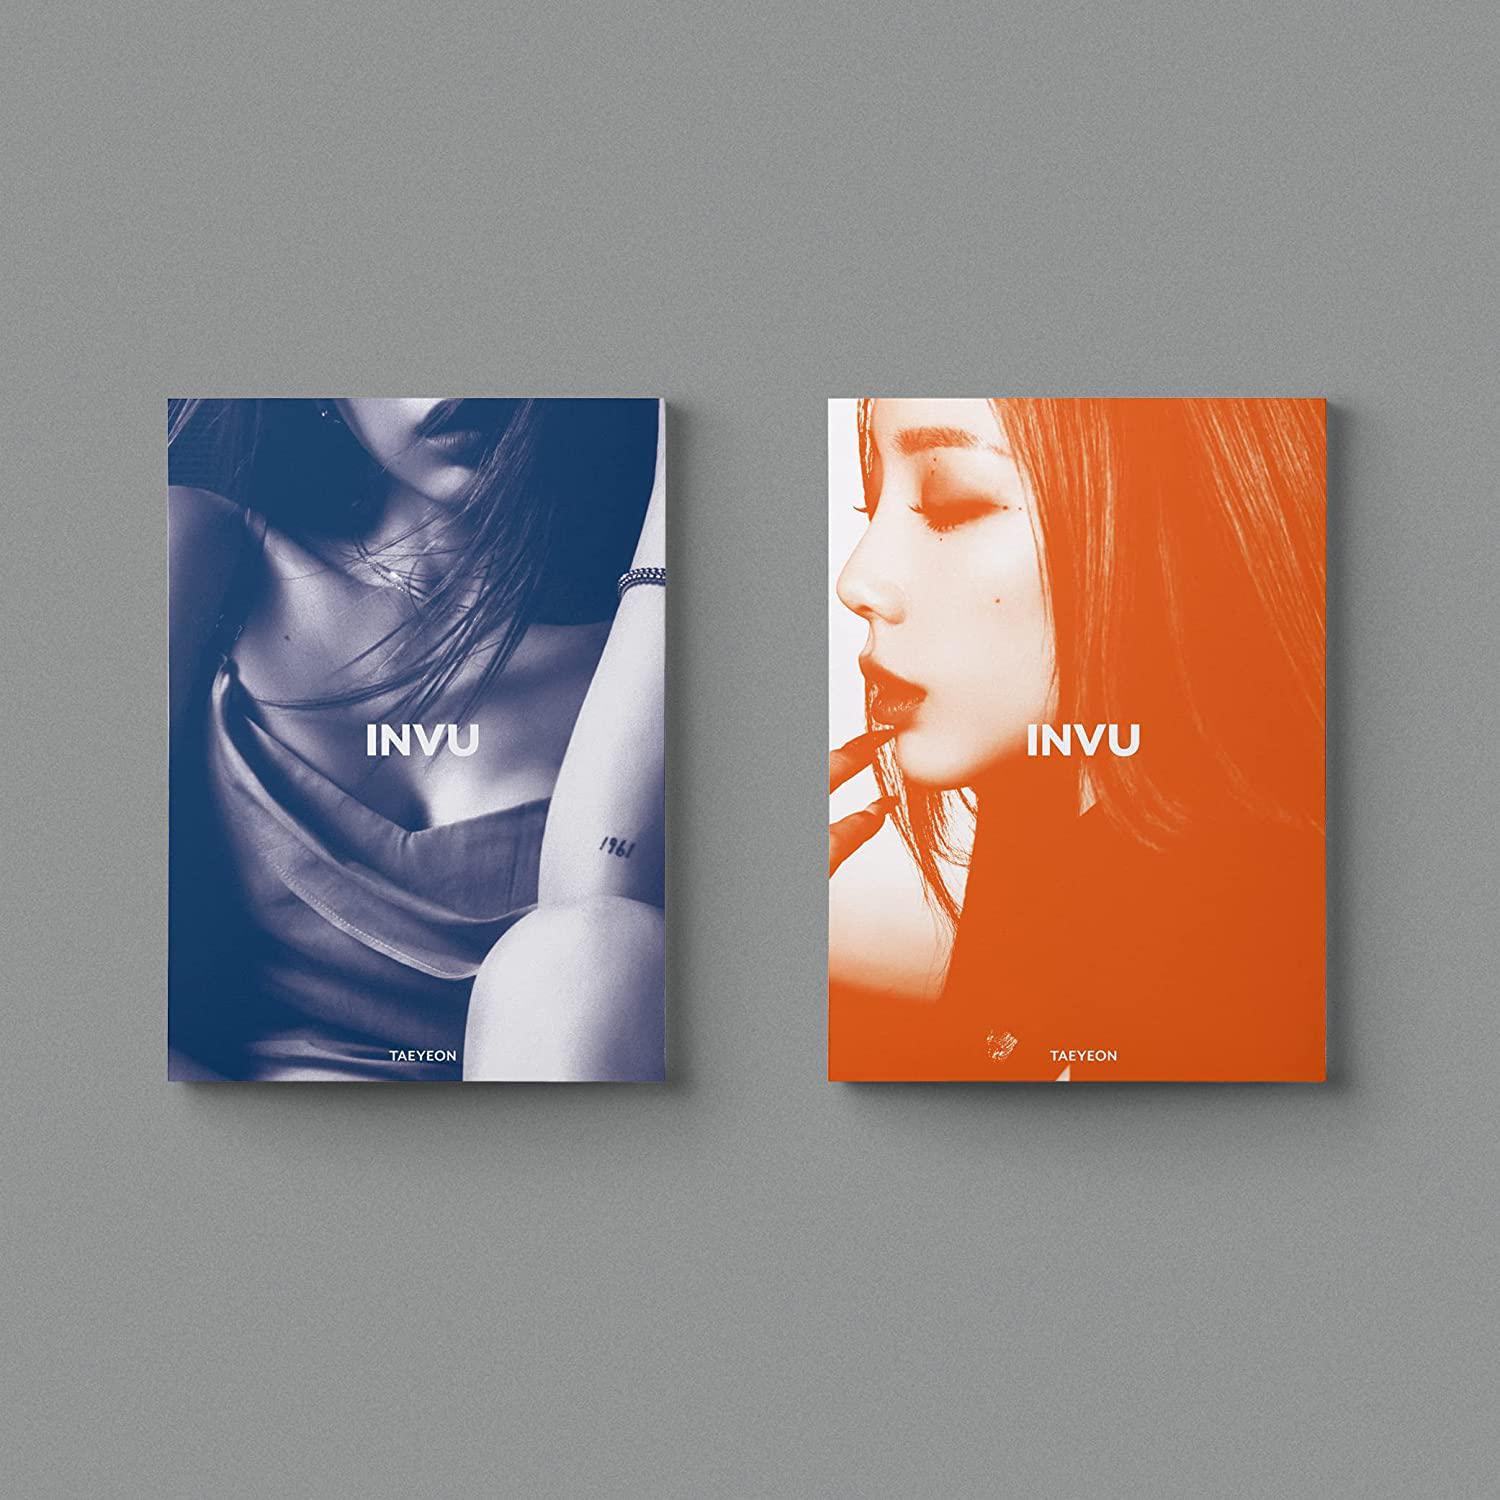 sm ent. taeyeon - invu [orange ver.] (3rd album) album+pre order limited benefits+culturekorean gift(decorative stickers,phot